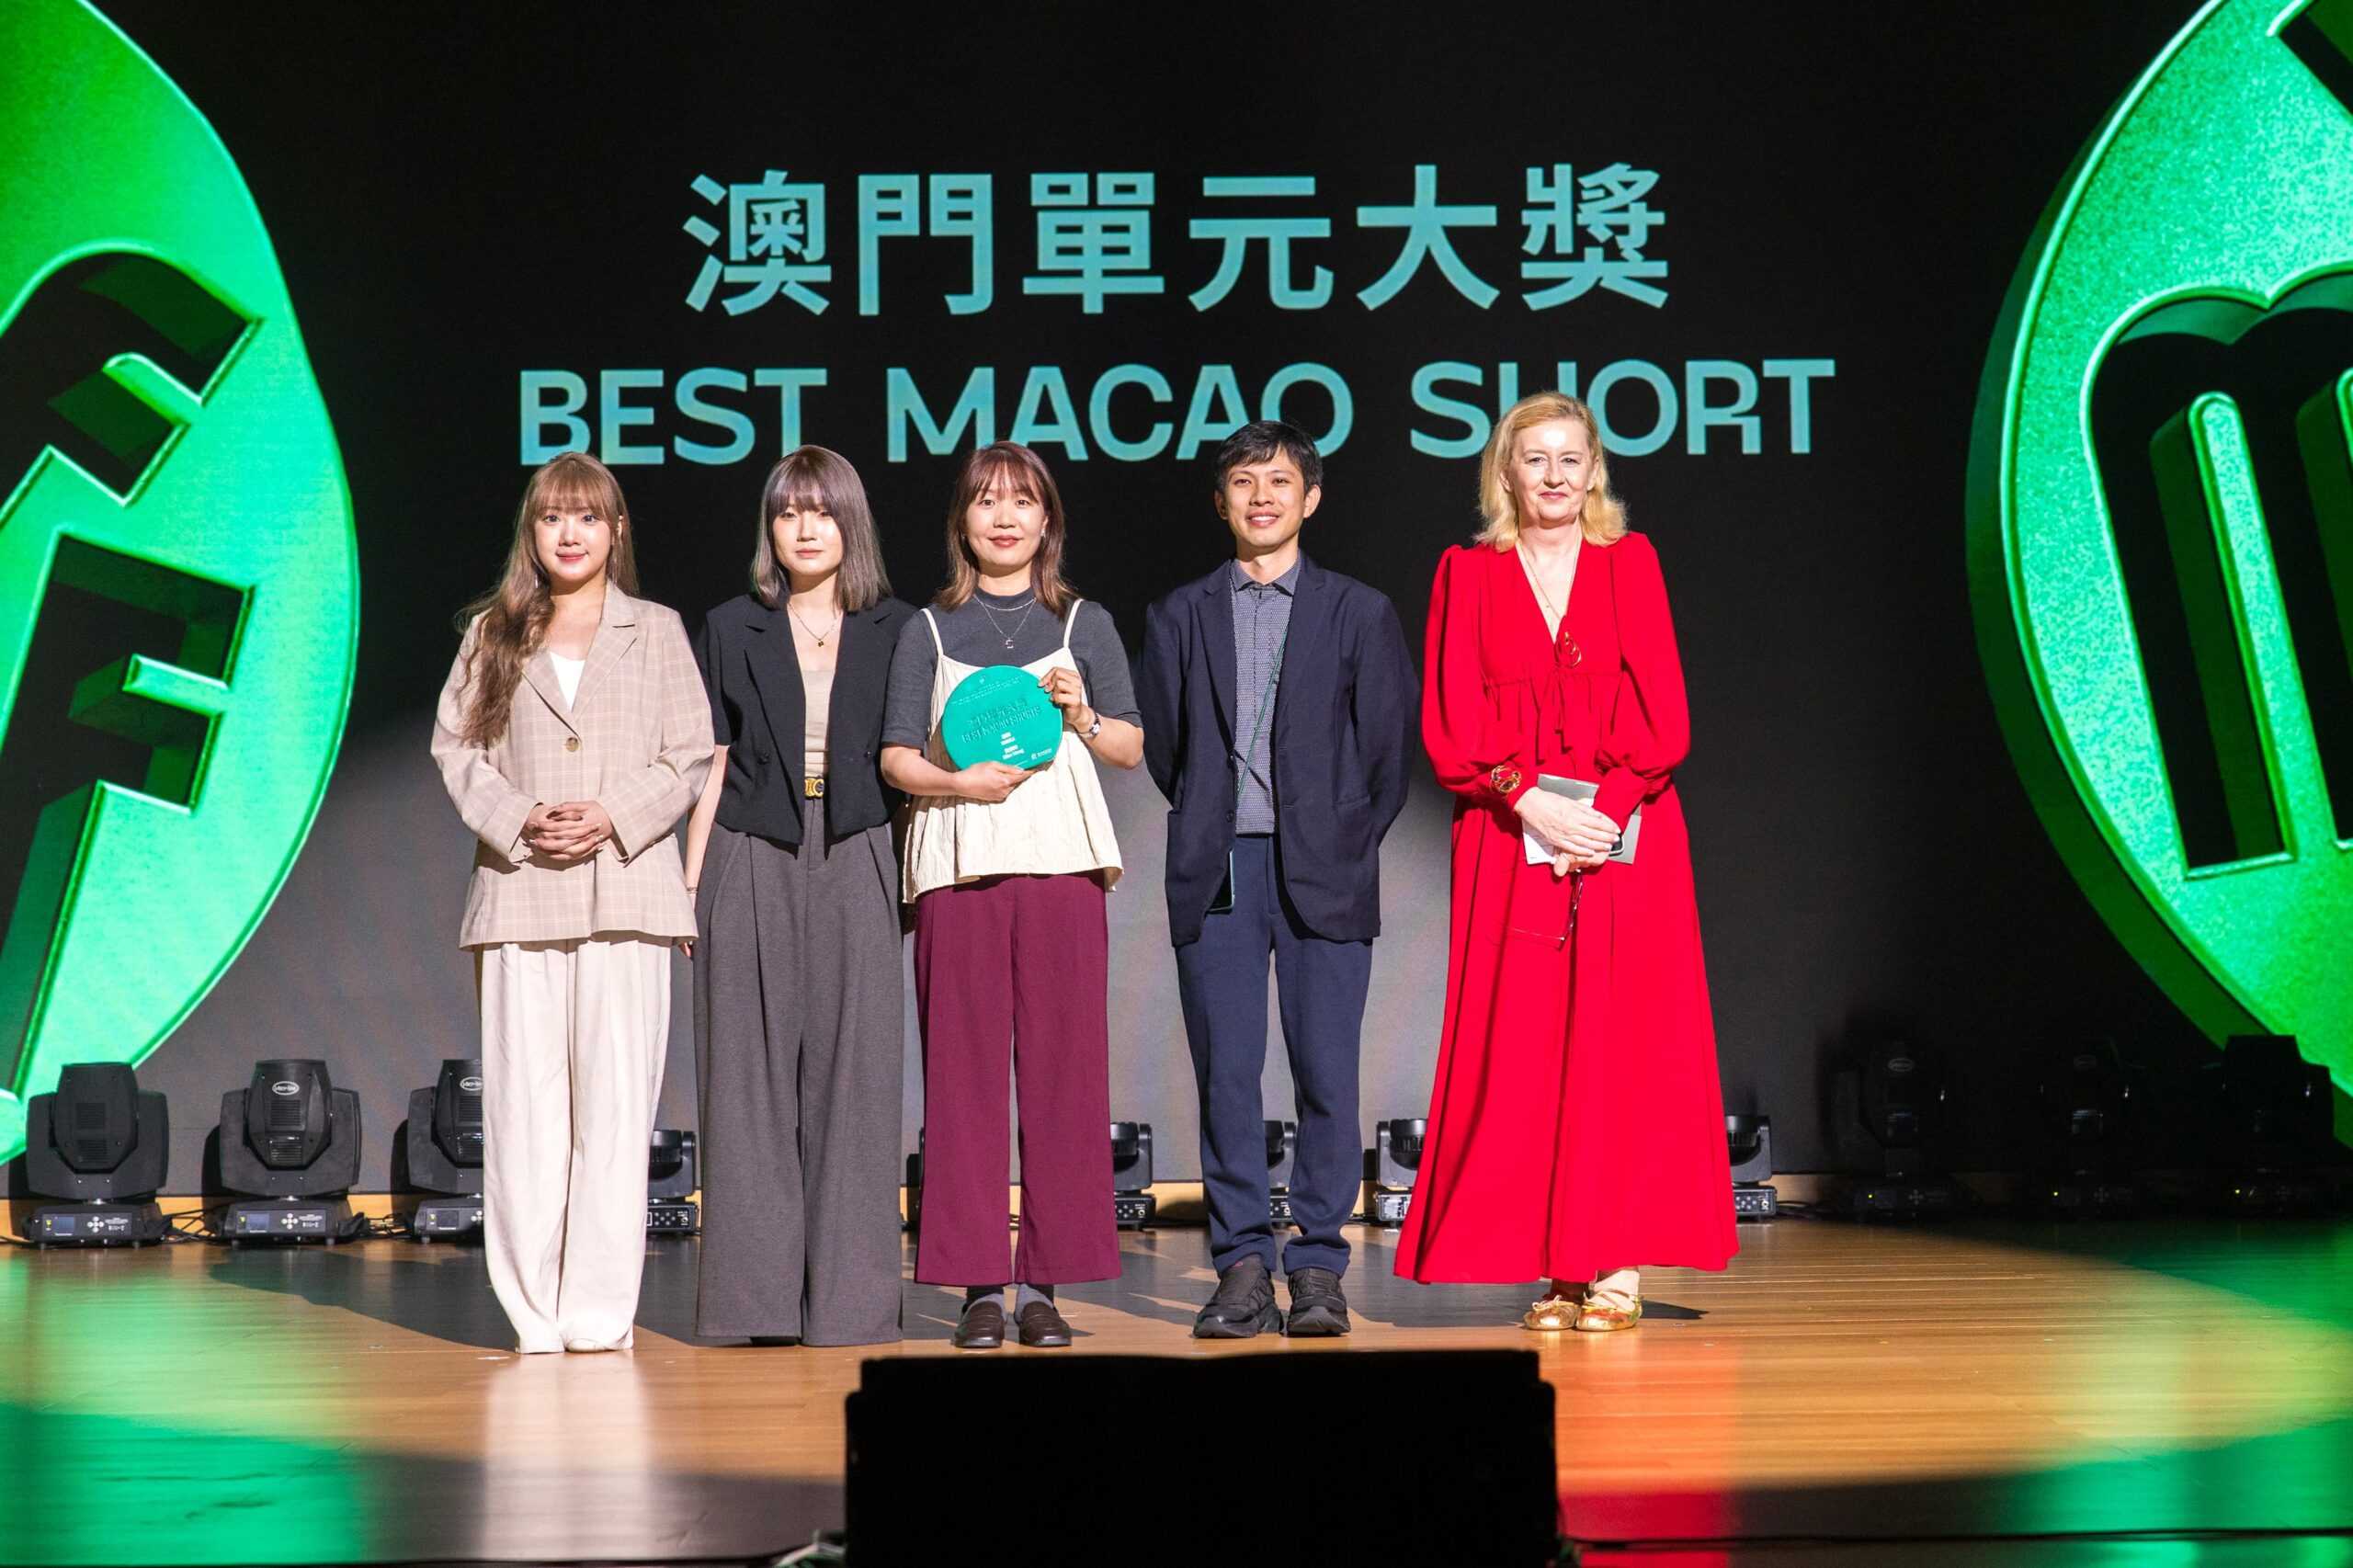 Festival de Curtas | “BUBBLE”, de Ellen Wong, ganha Prémio Macau